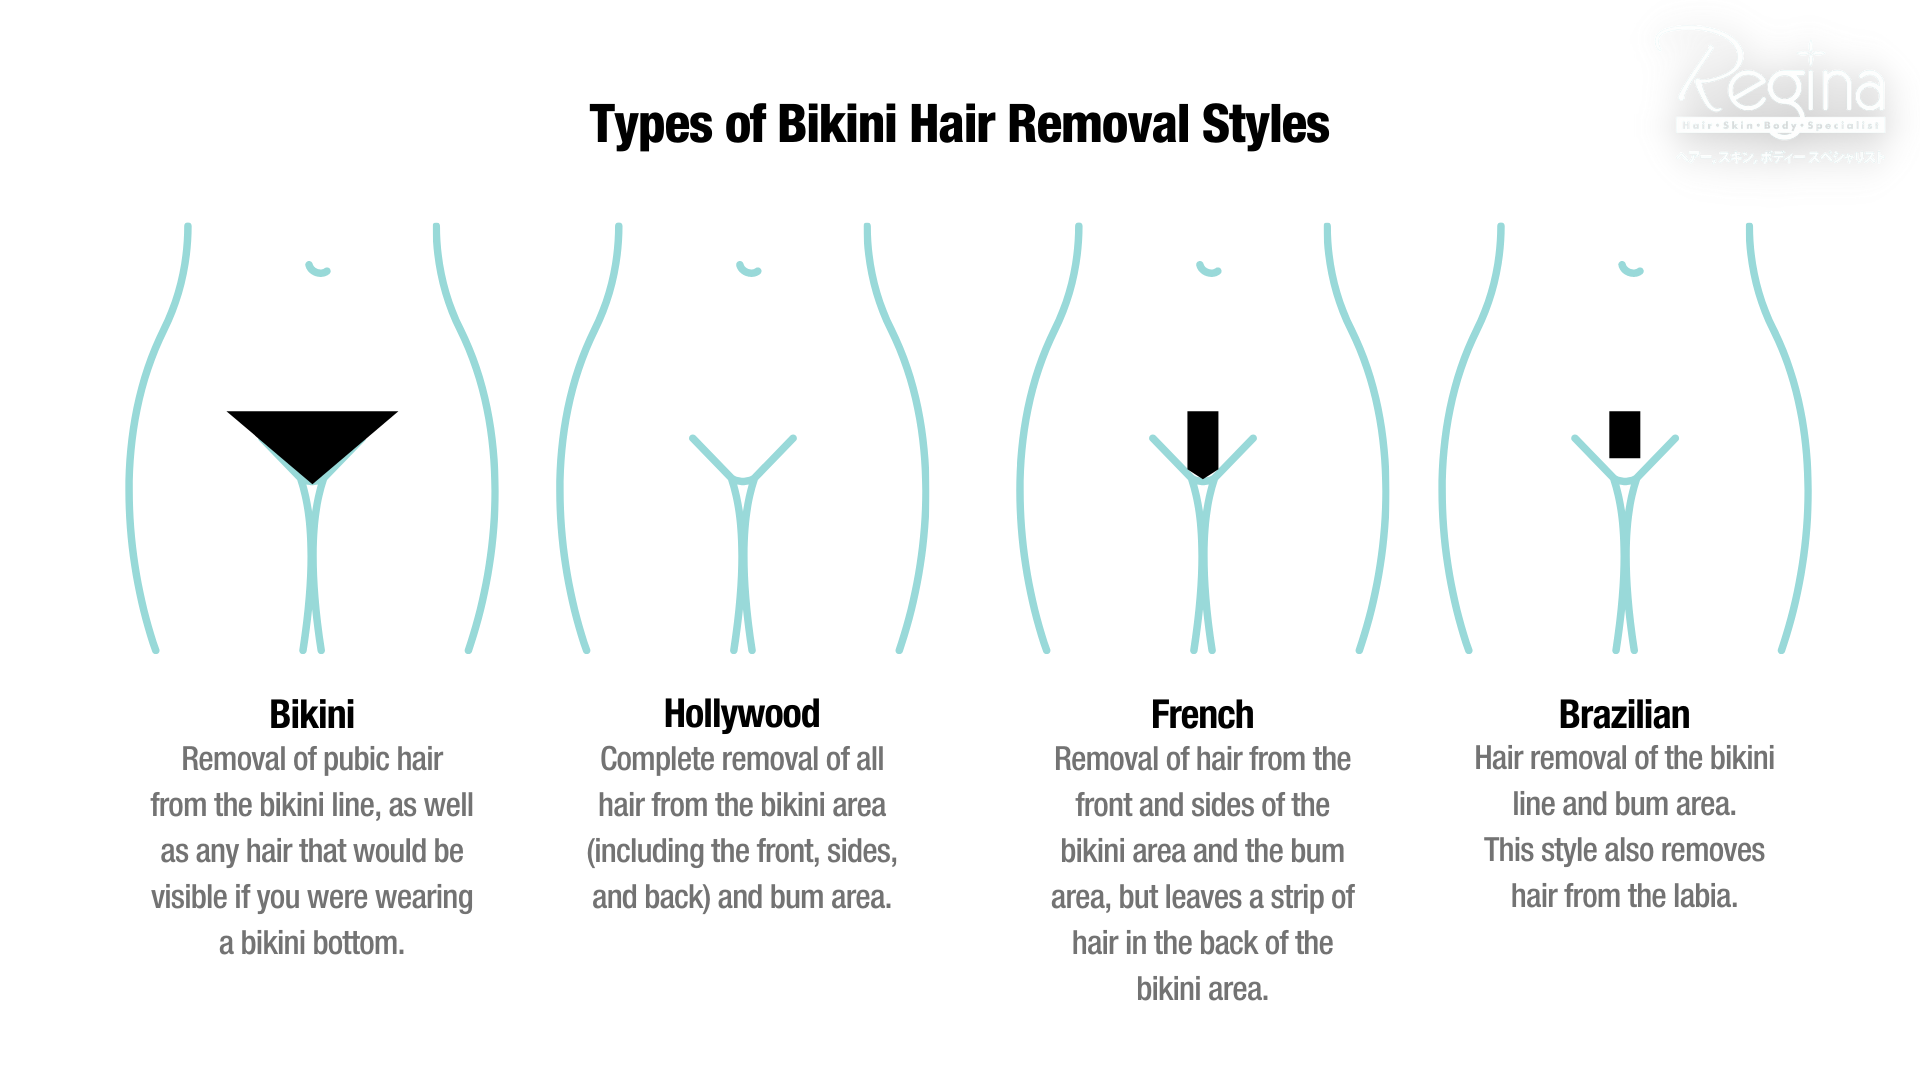 Types of Bikini Hair Removal Styles